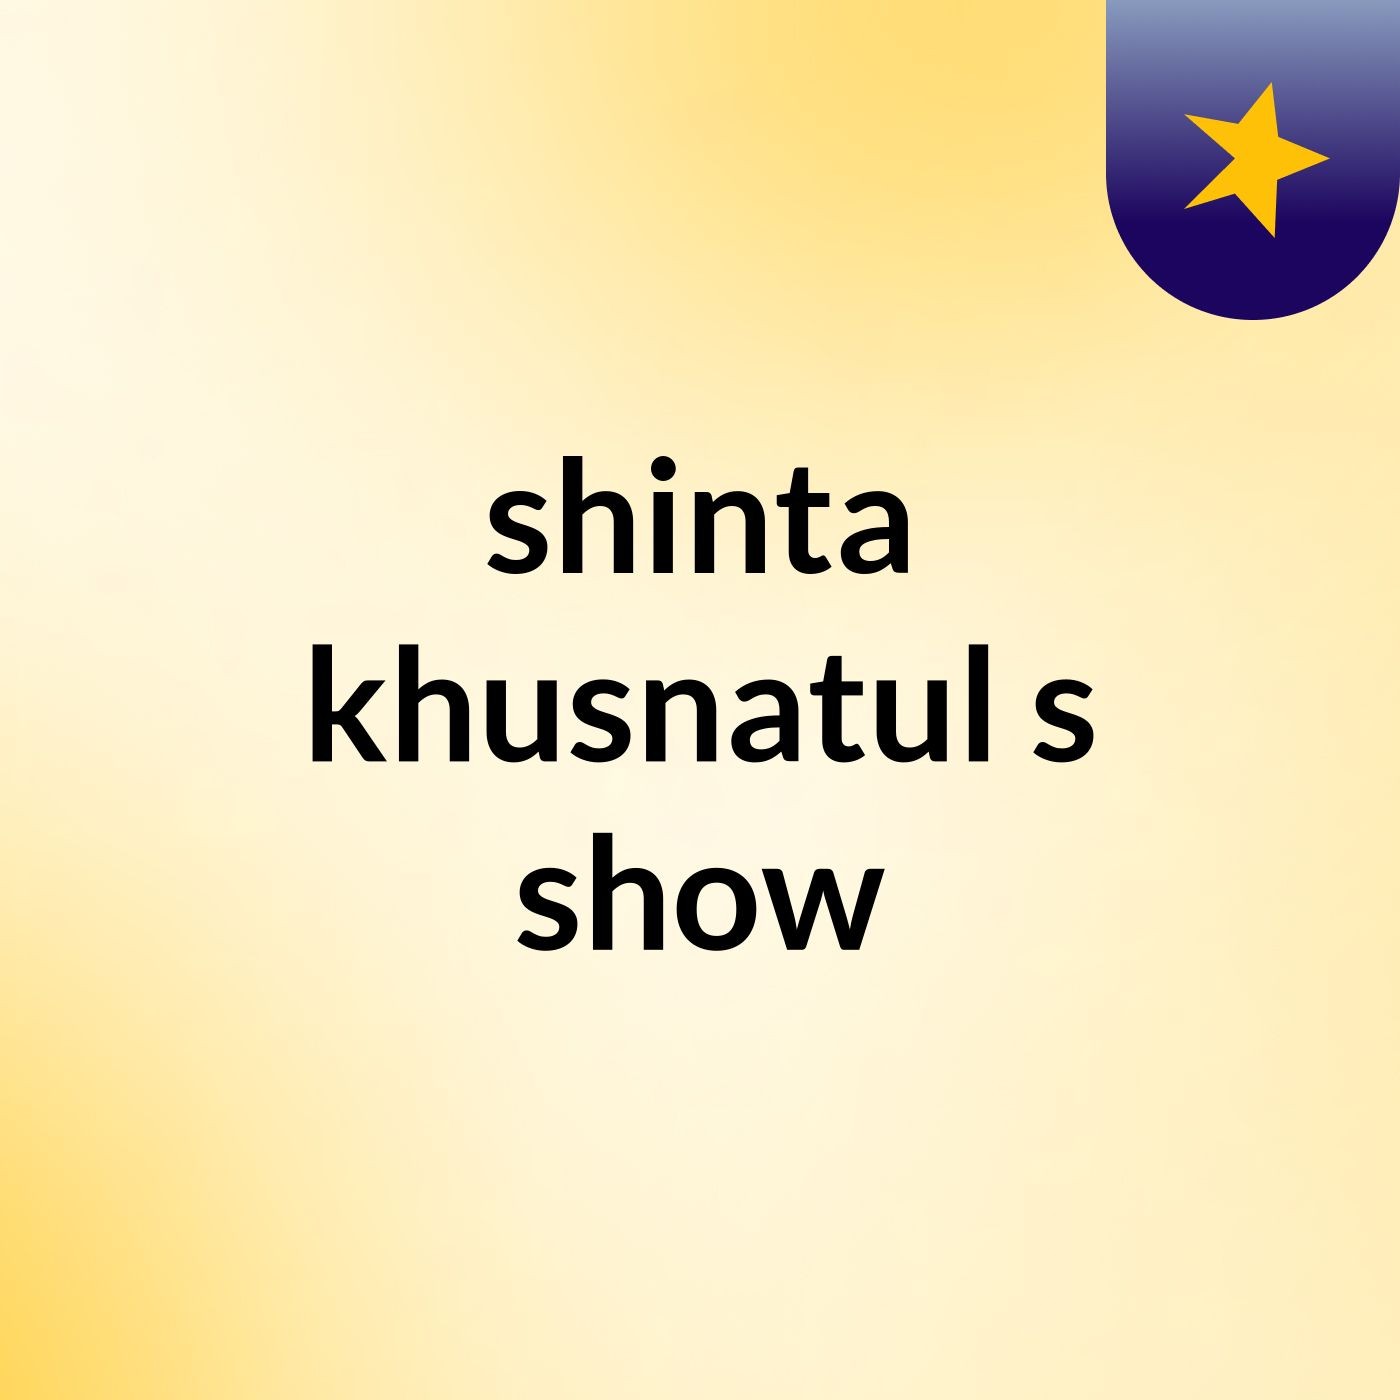 Episode 12 - shinta khusnatul's show